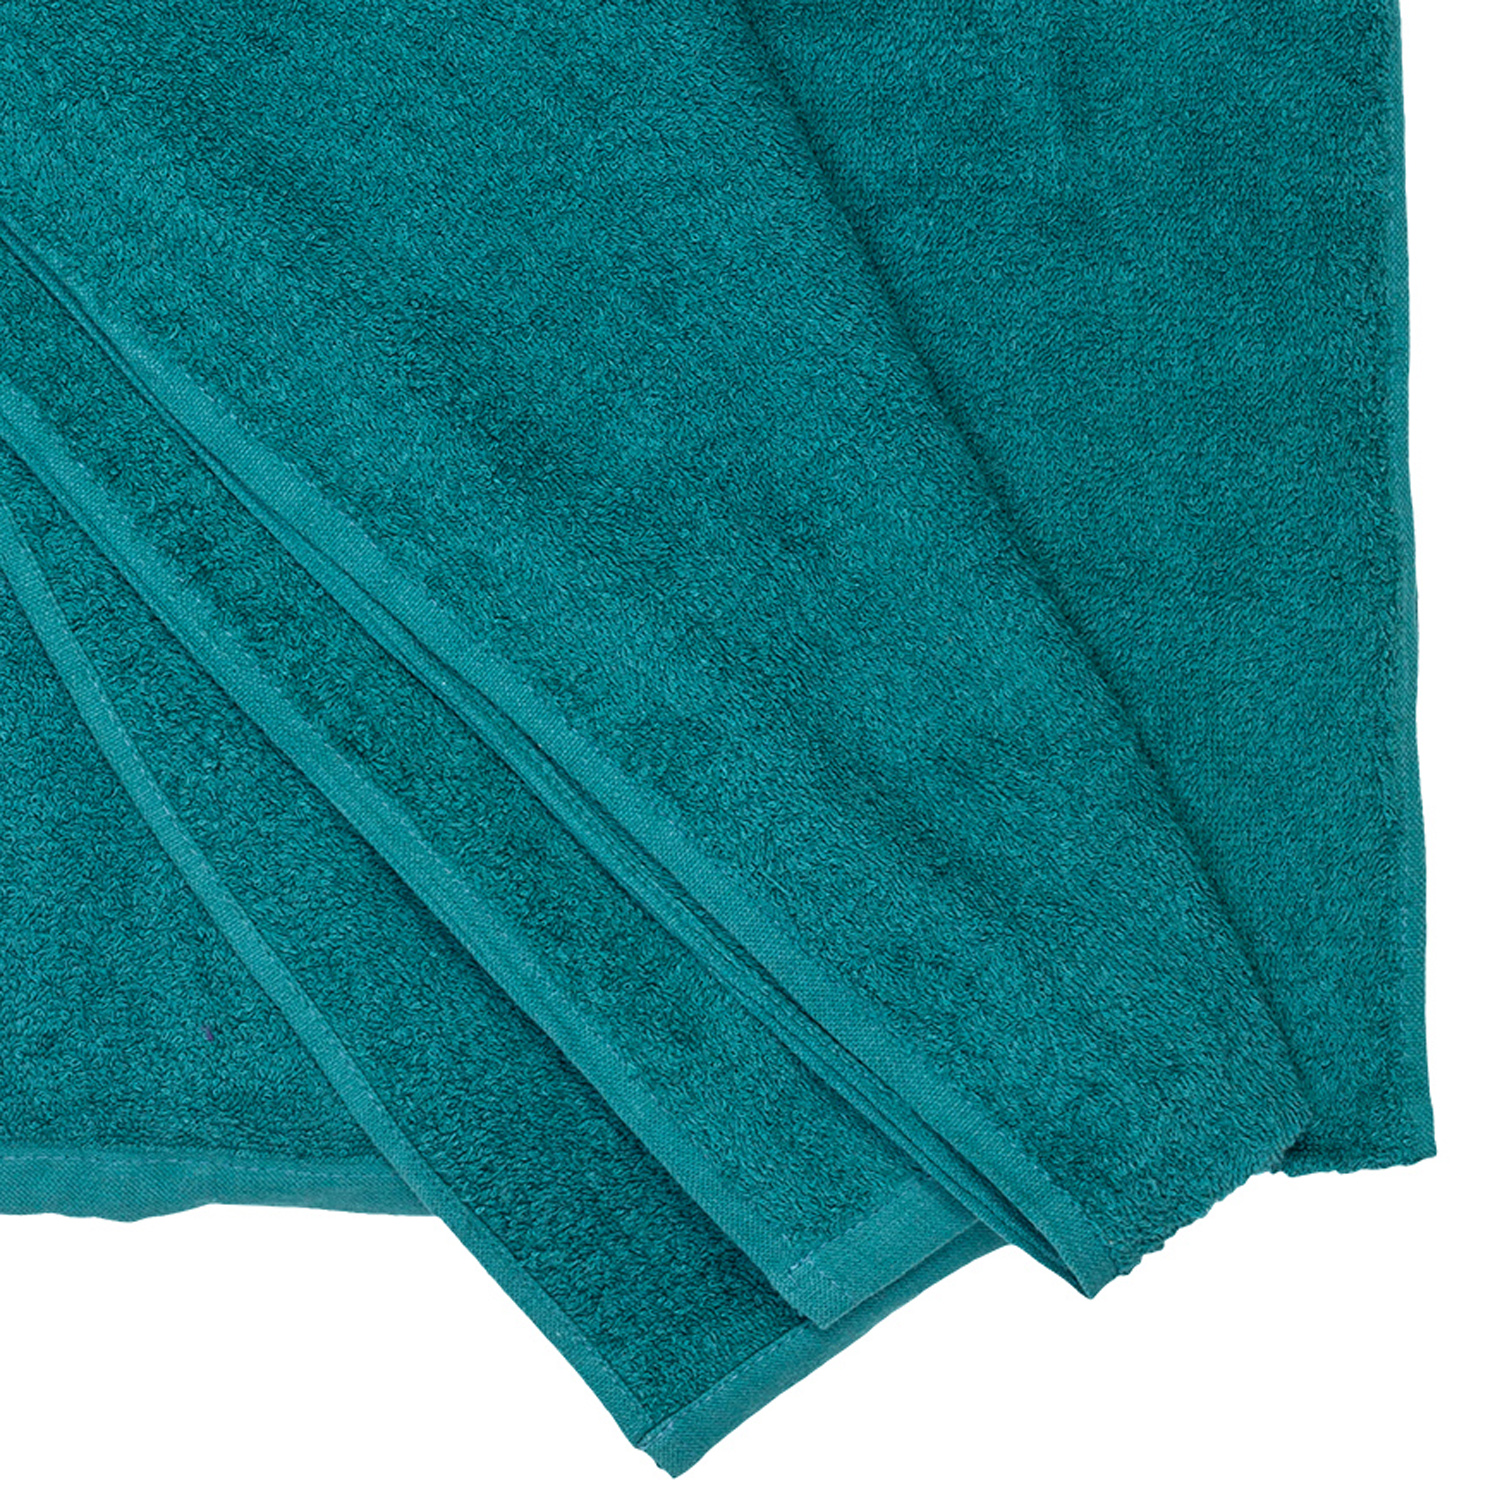 Bath towel series Helsinki in petrol by Adamo in large sizes 100x220 cm or 155x220 cm